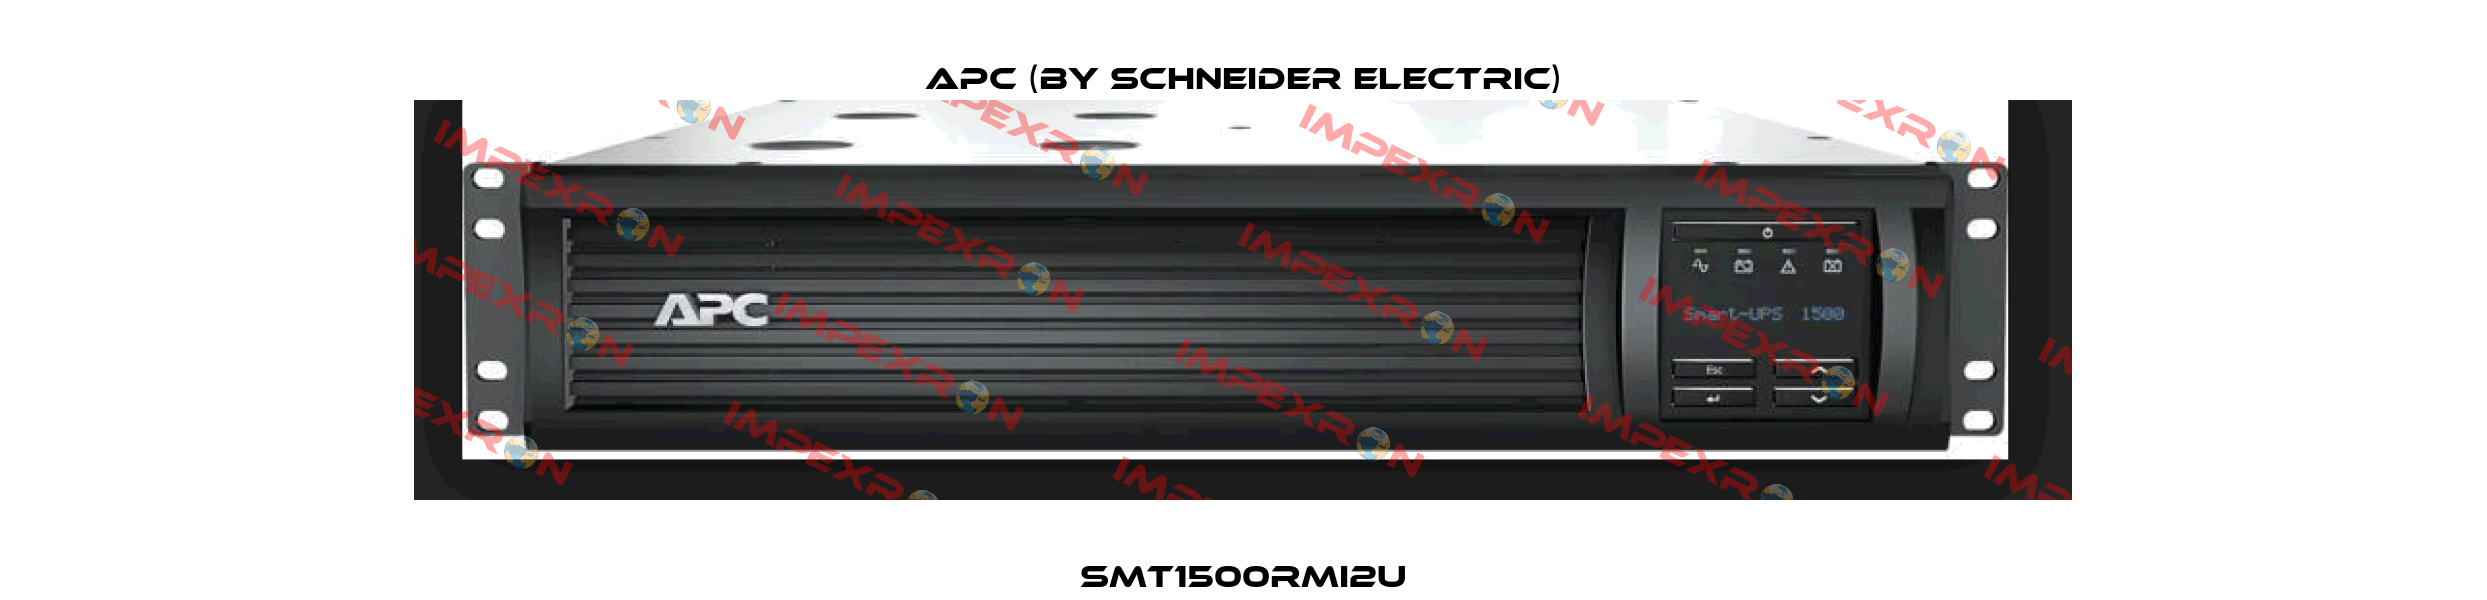 SMT1500RMI2U APC (by Schneider Electric)